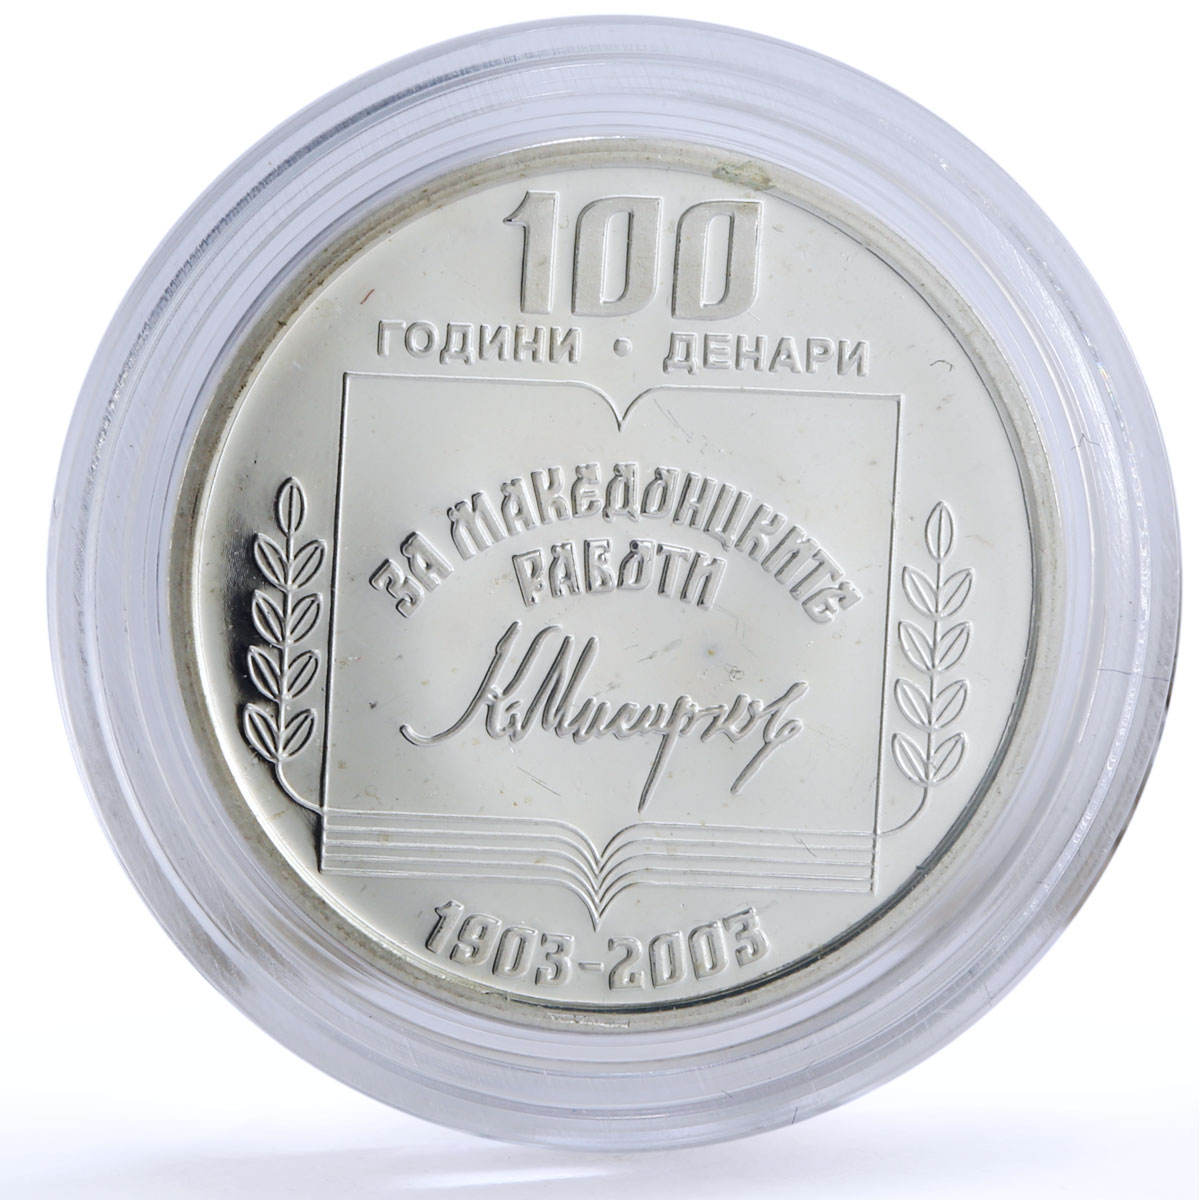 Macedonia 100 denari Statehood Krste Petkov Politics proba silver coin 2003